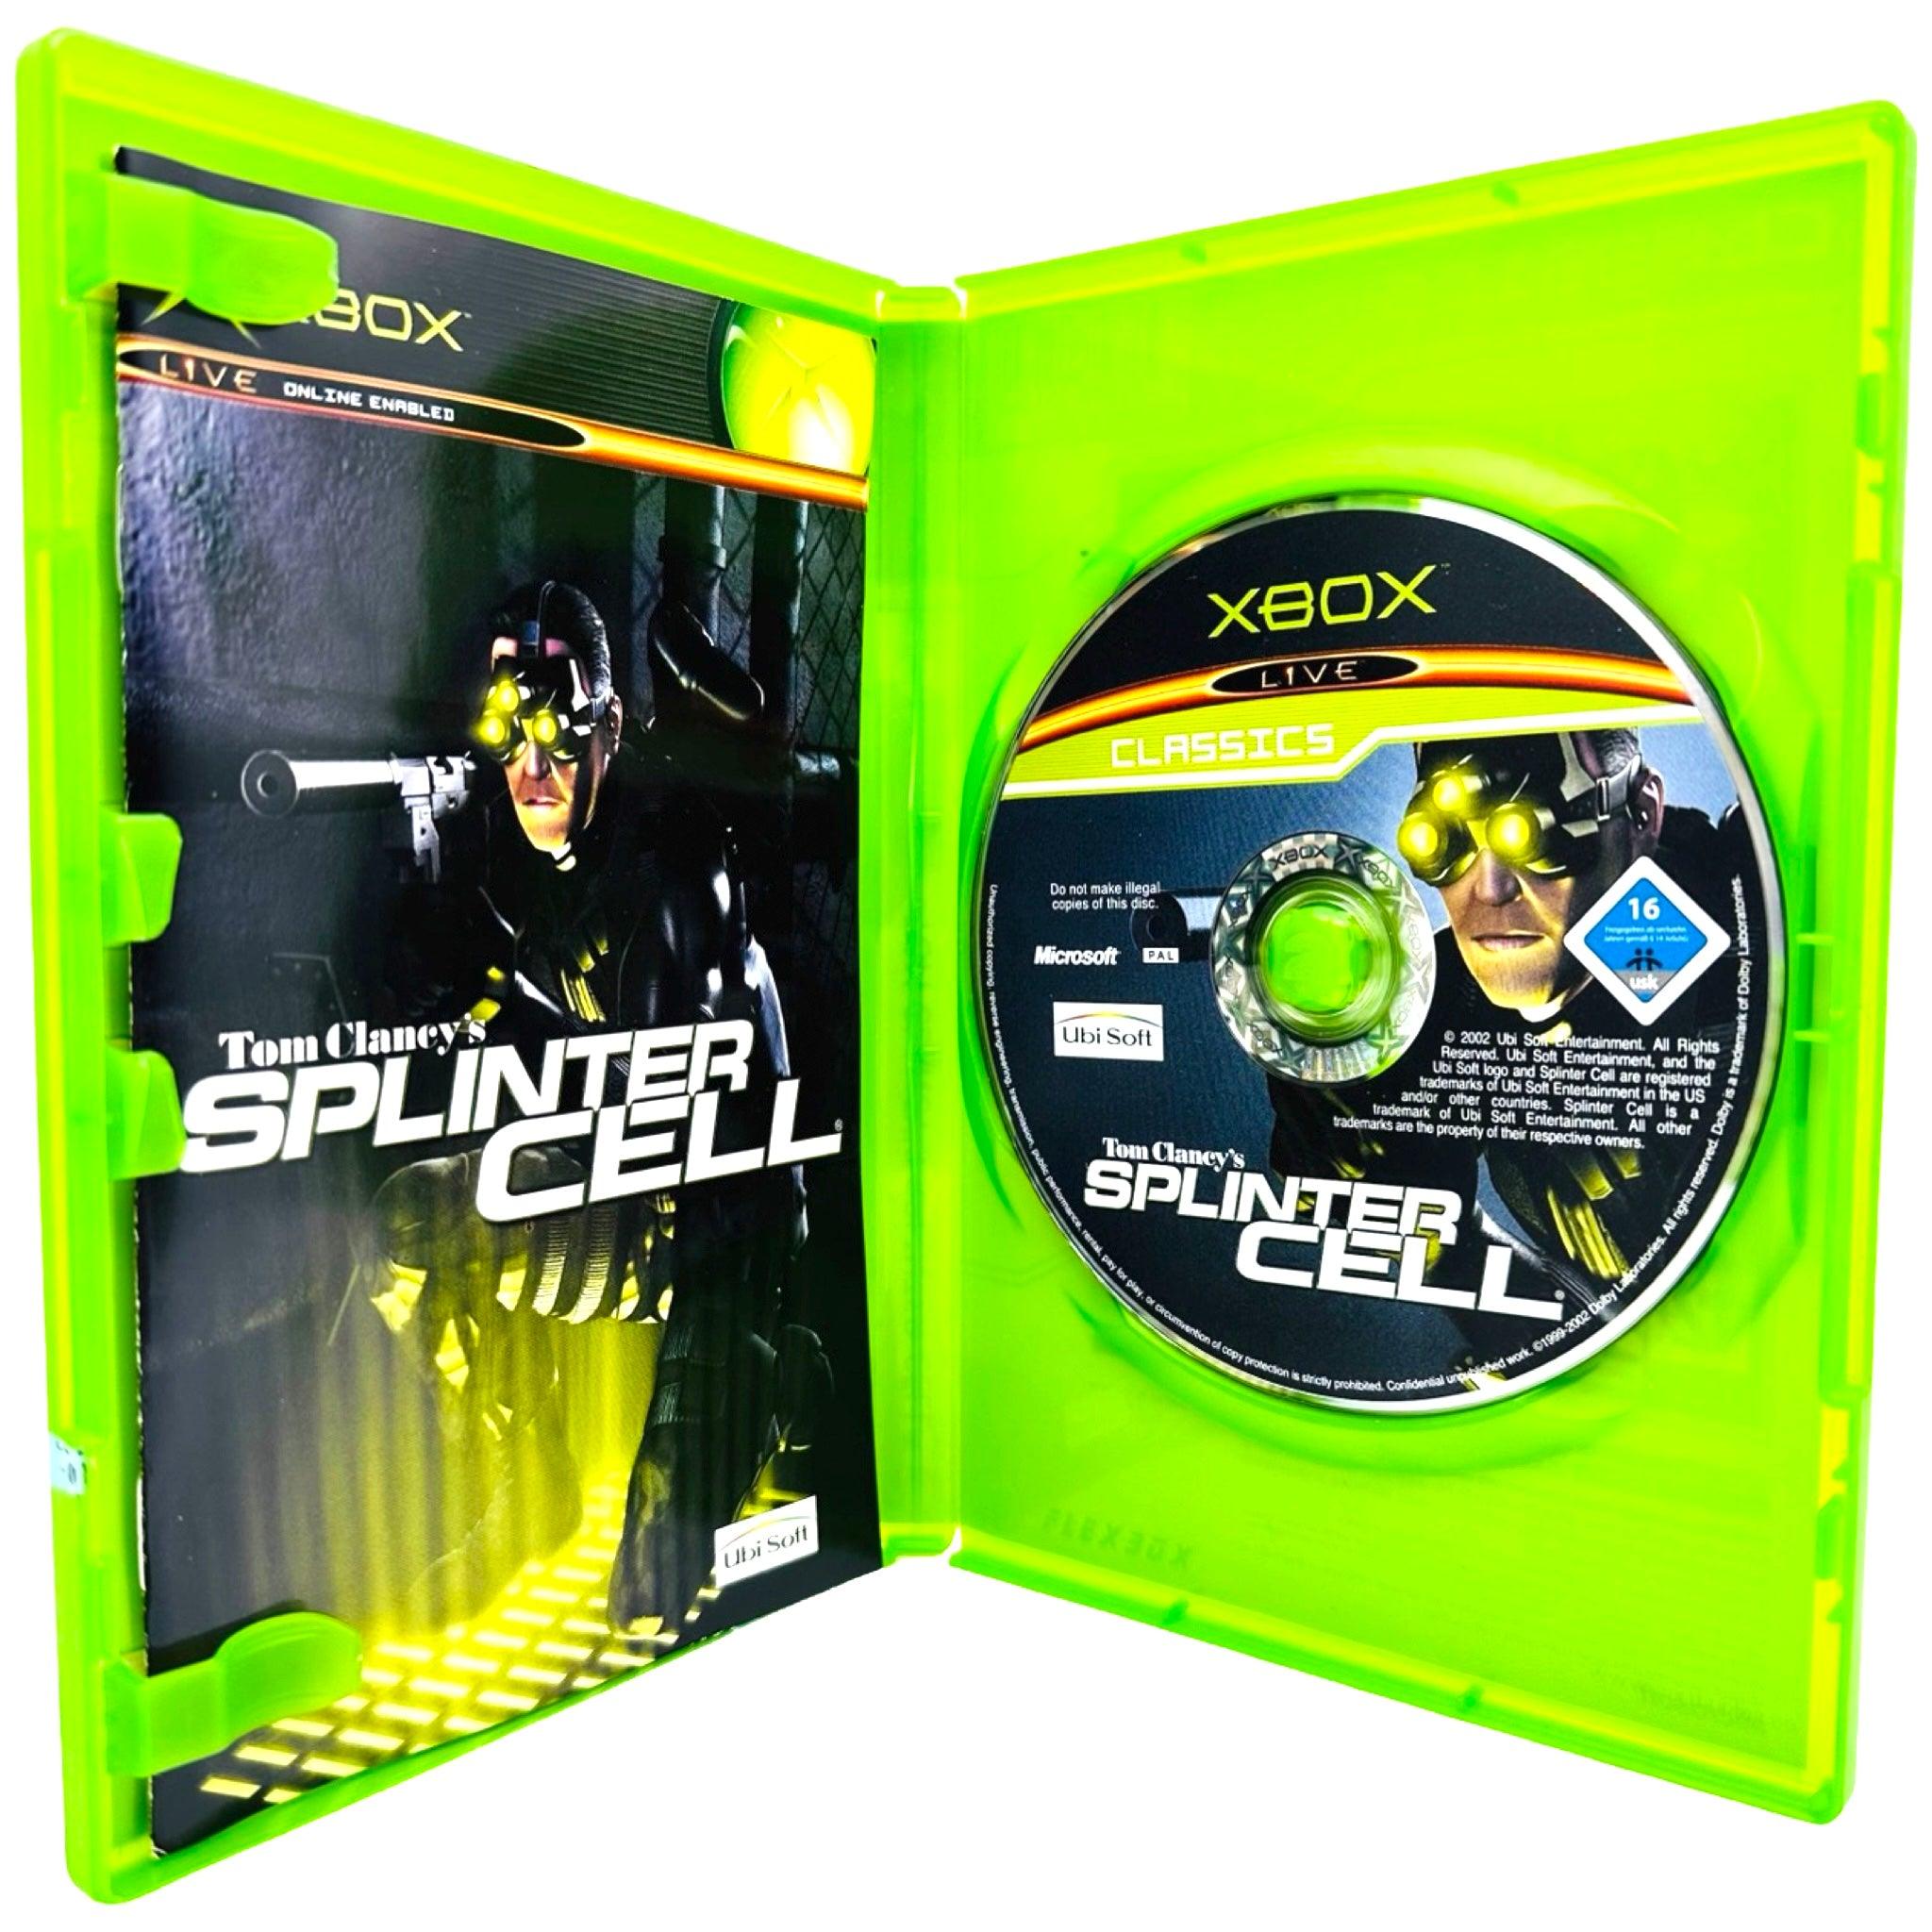 Xbox: Splinter Cell - RetroGaming.no